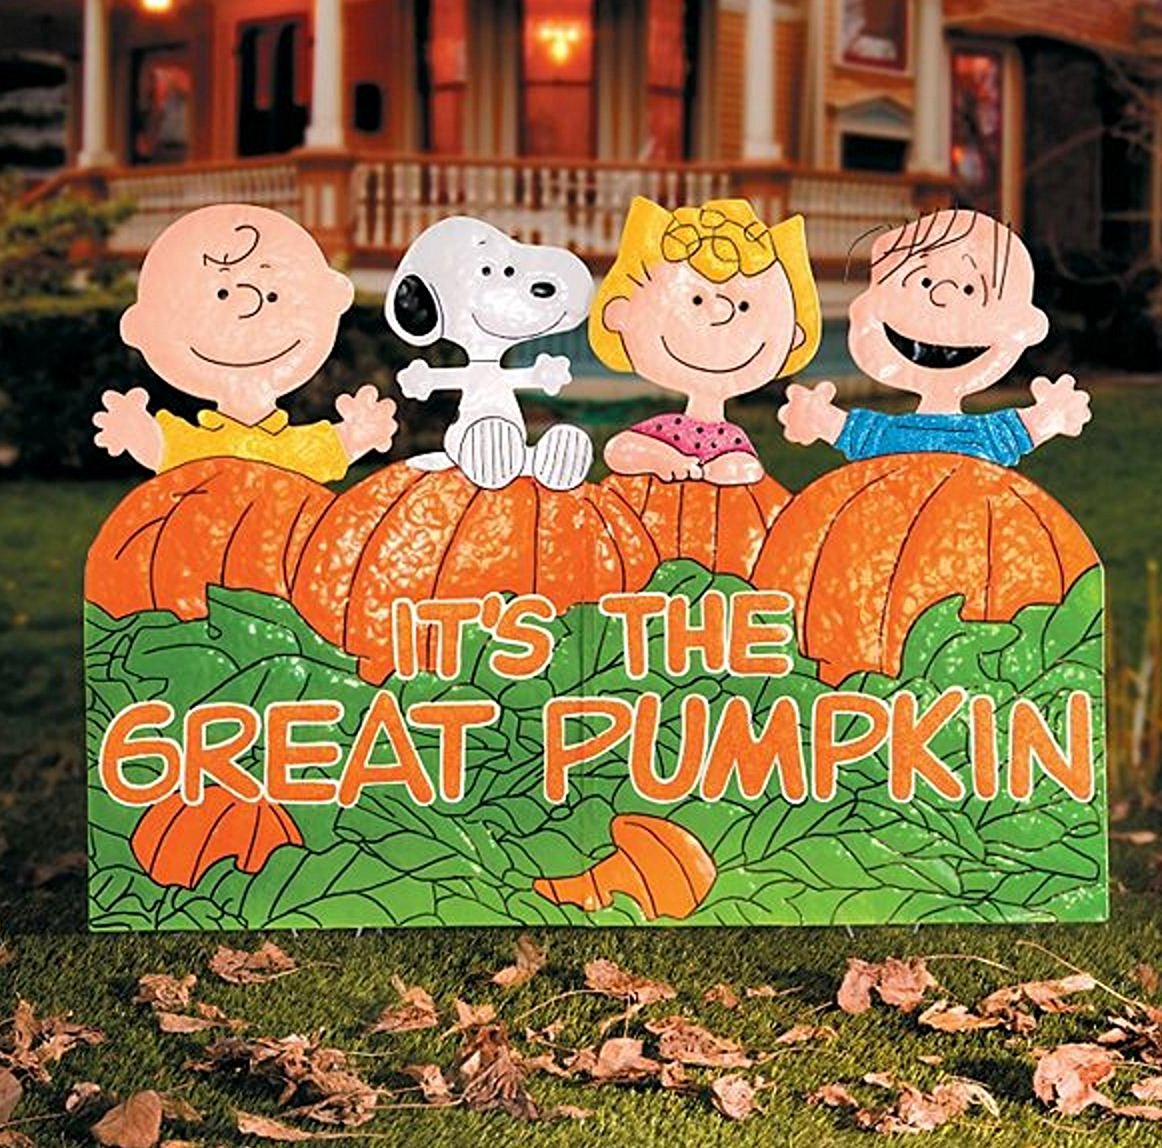 Peanuts Halloween Fun at Amazon - CollectPeanuts.com